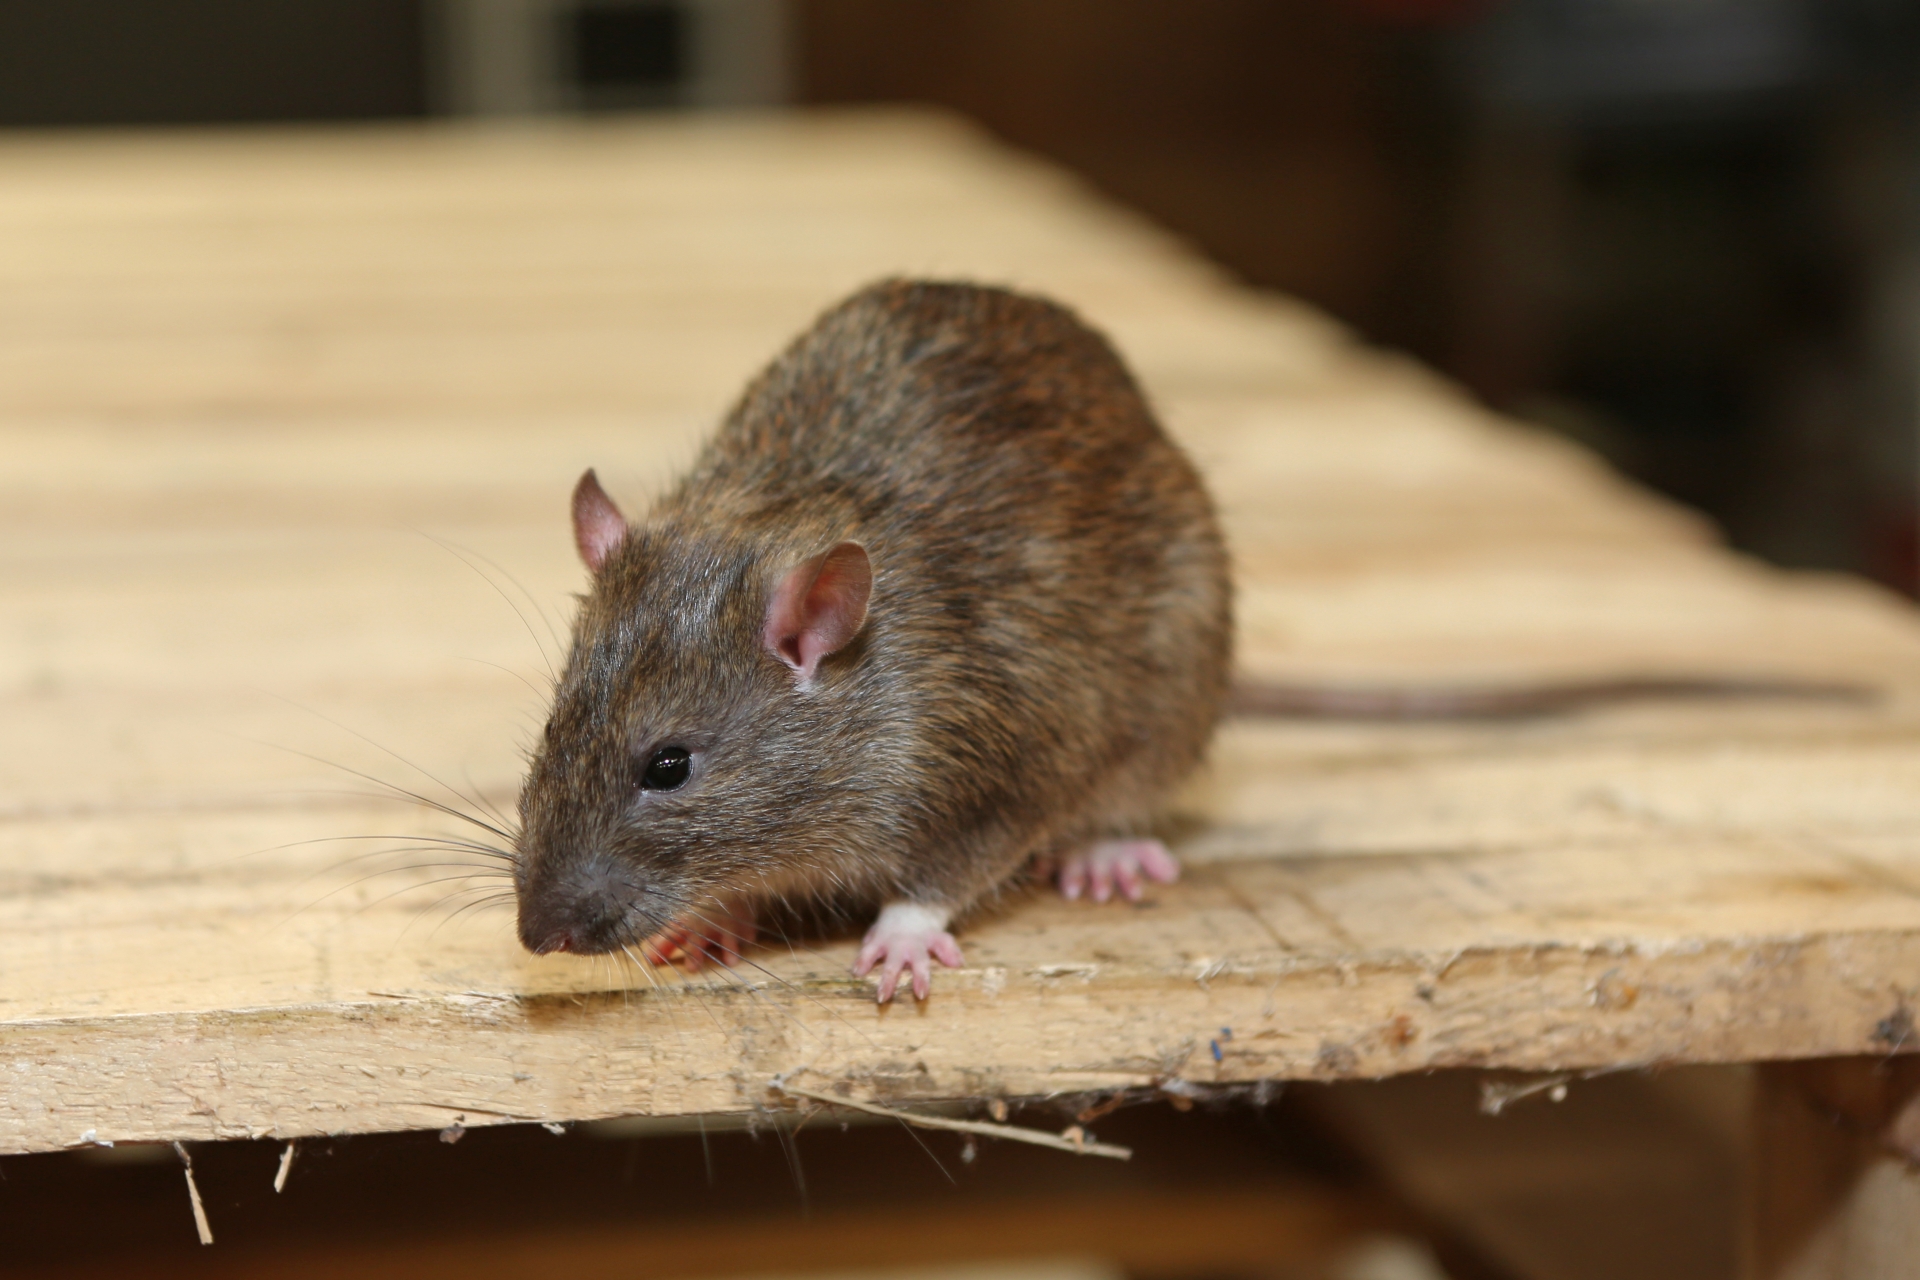 Rat extermination, Pest Control in Bexleyheath, Upton, DA6. Call Now 020 8166 9746